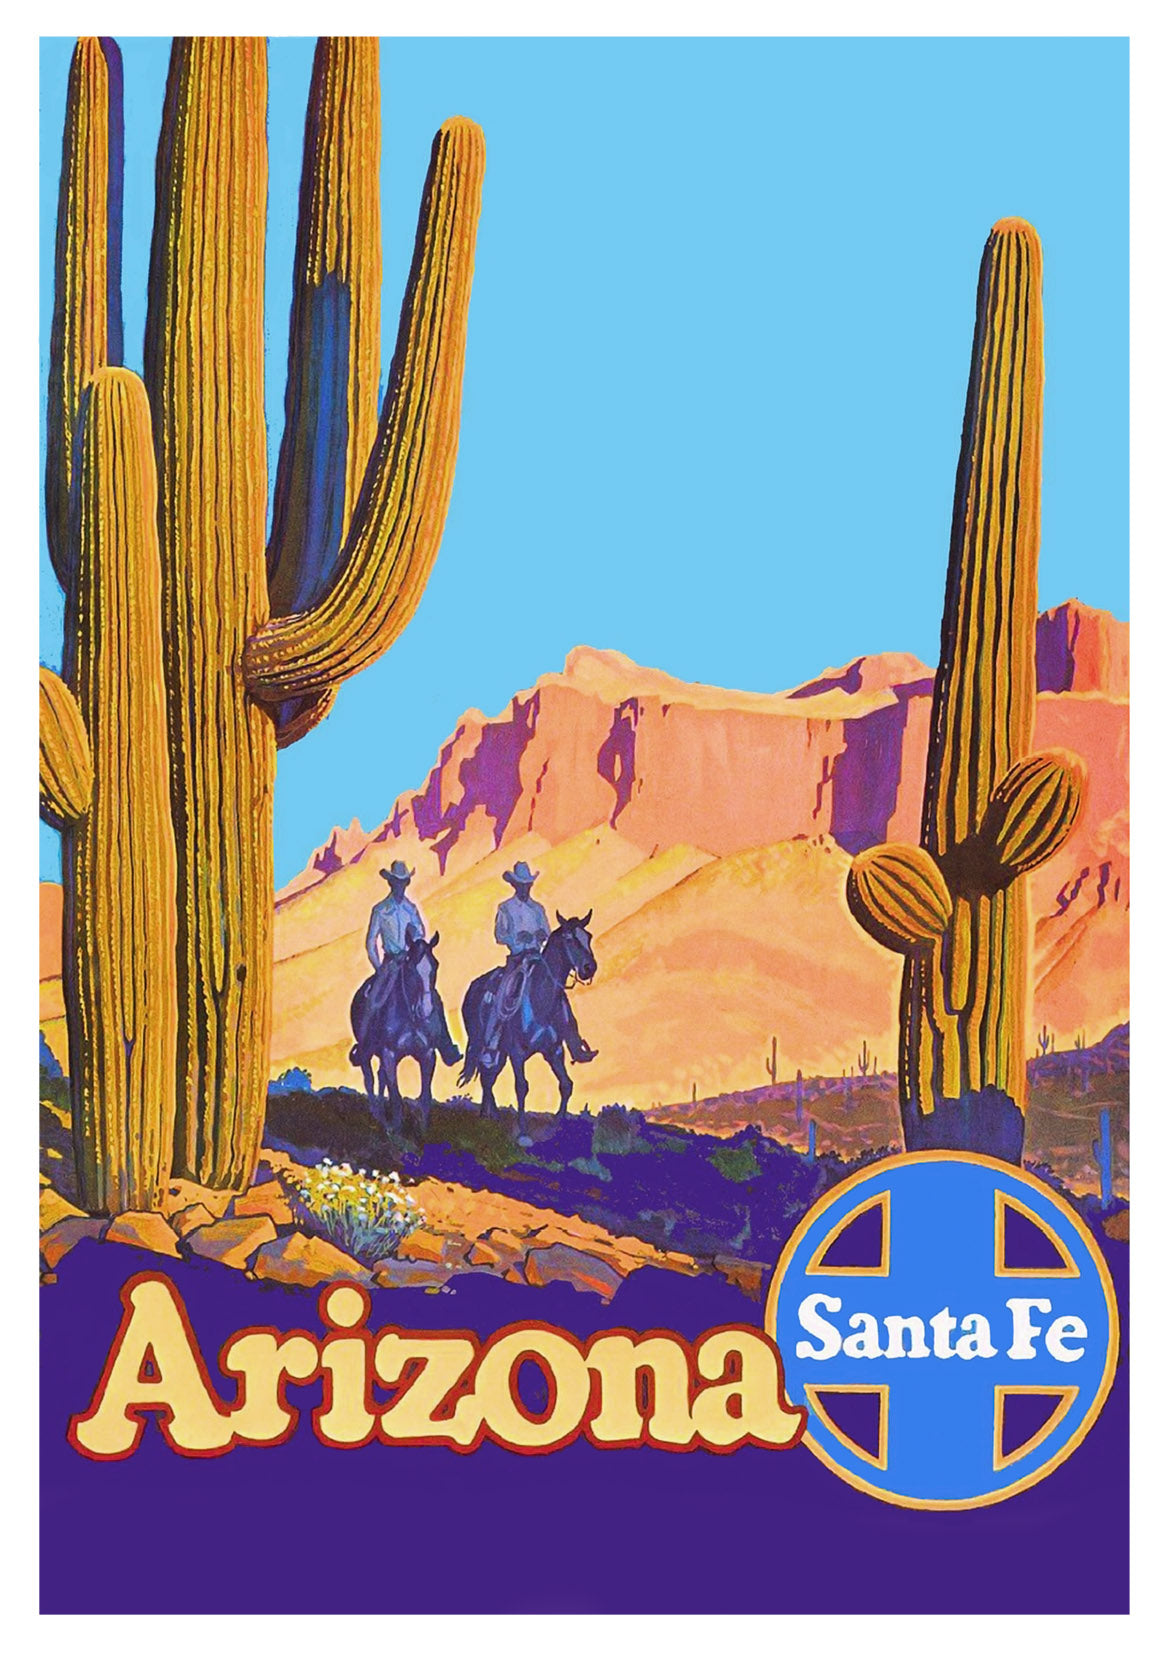 ARIZONA DESERT POSTER: Vintage Travel Advert, Cactus Art Print